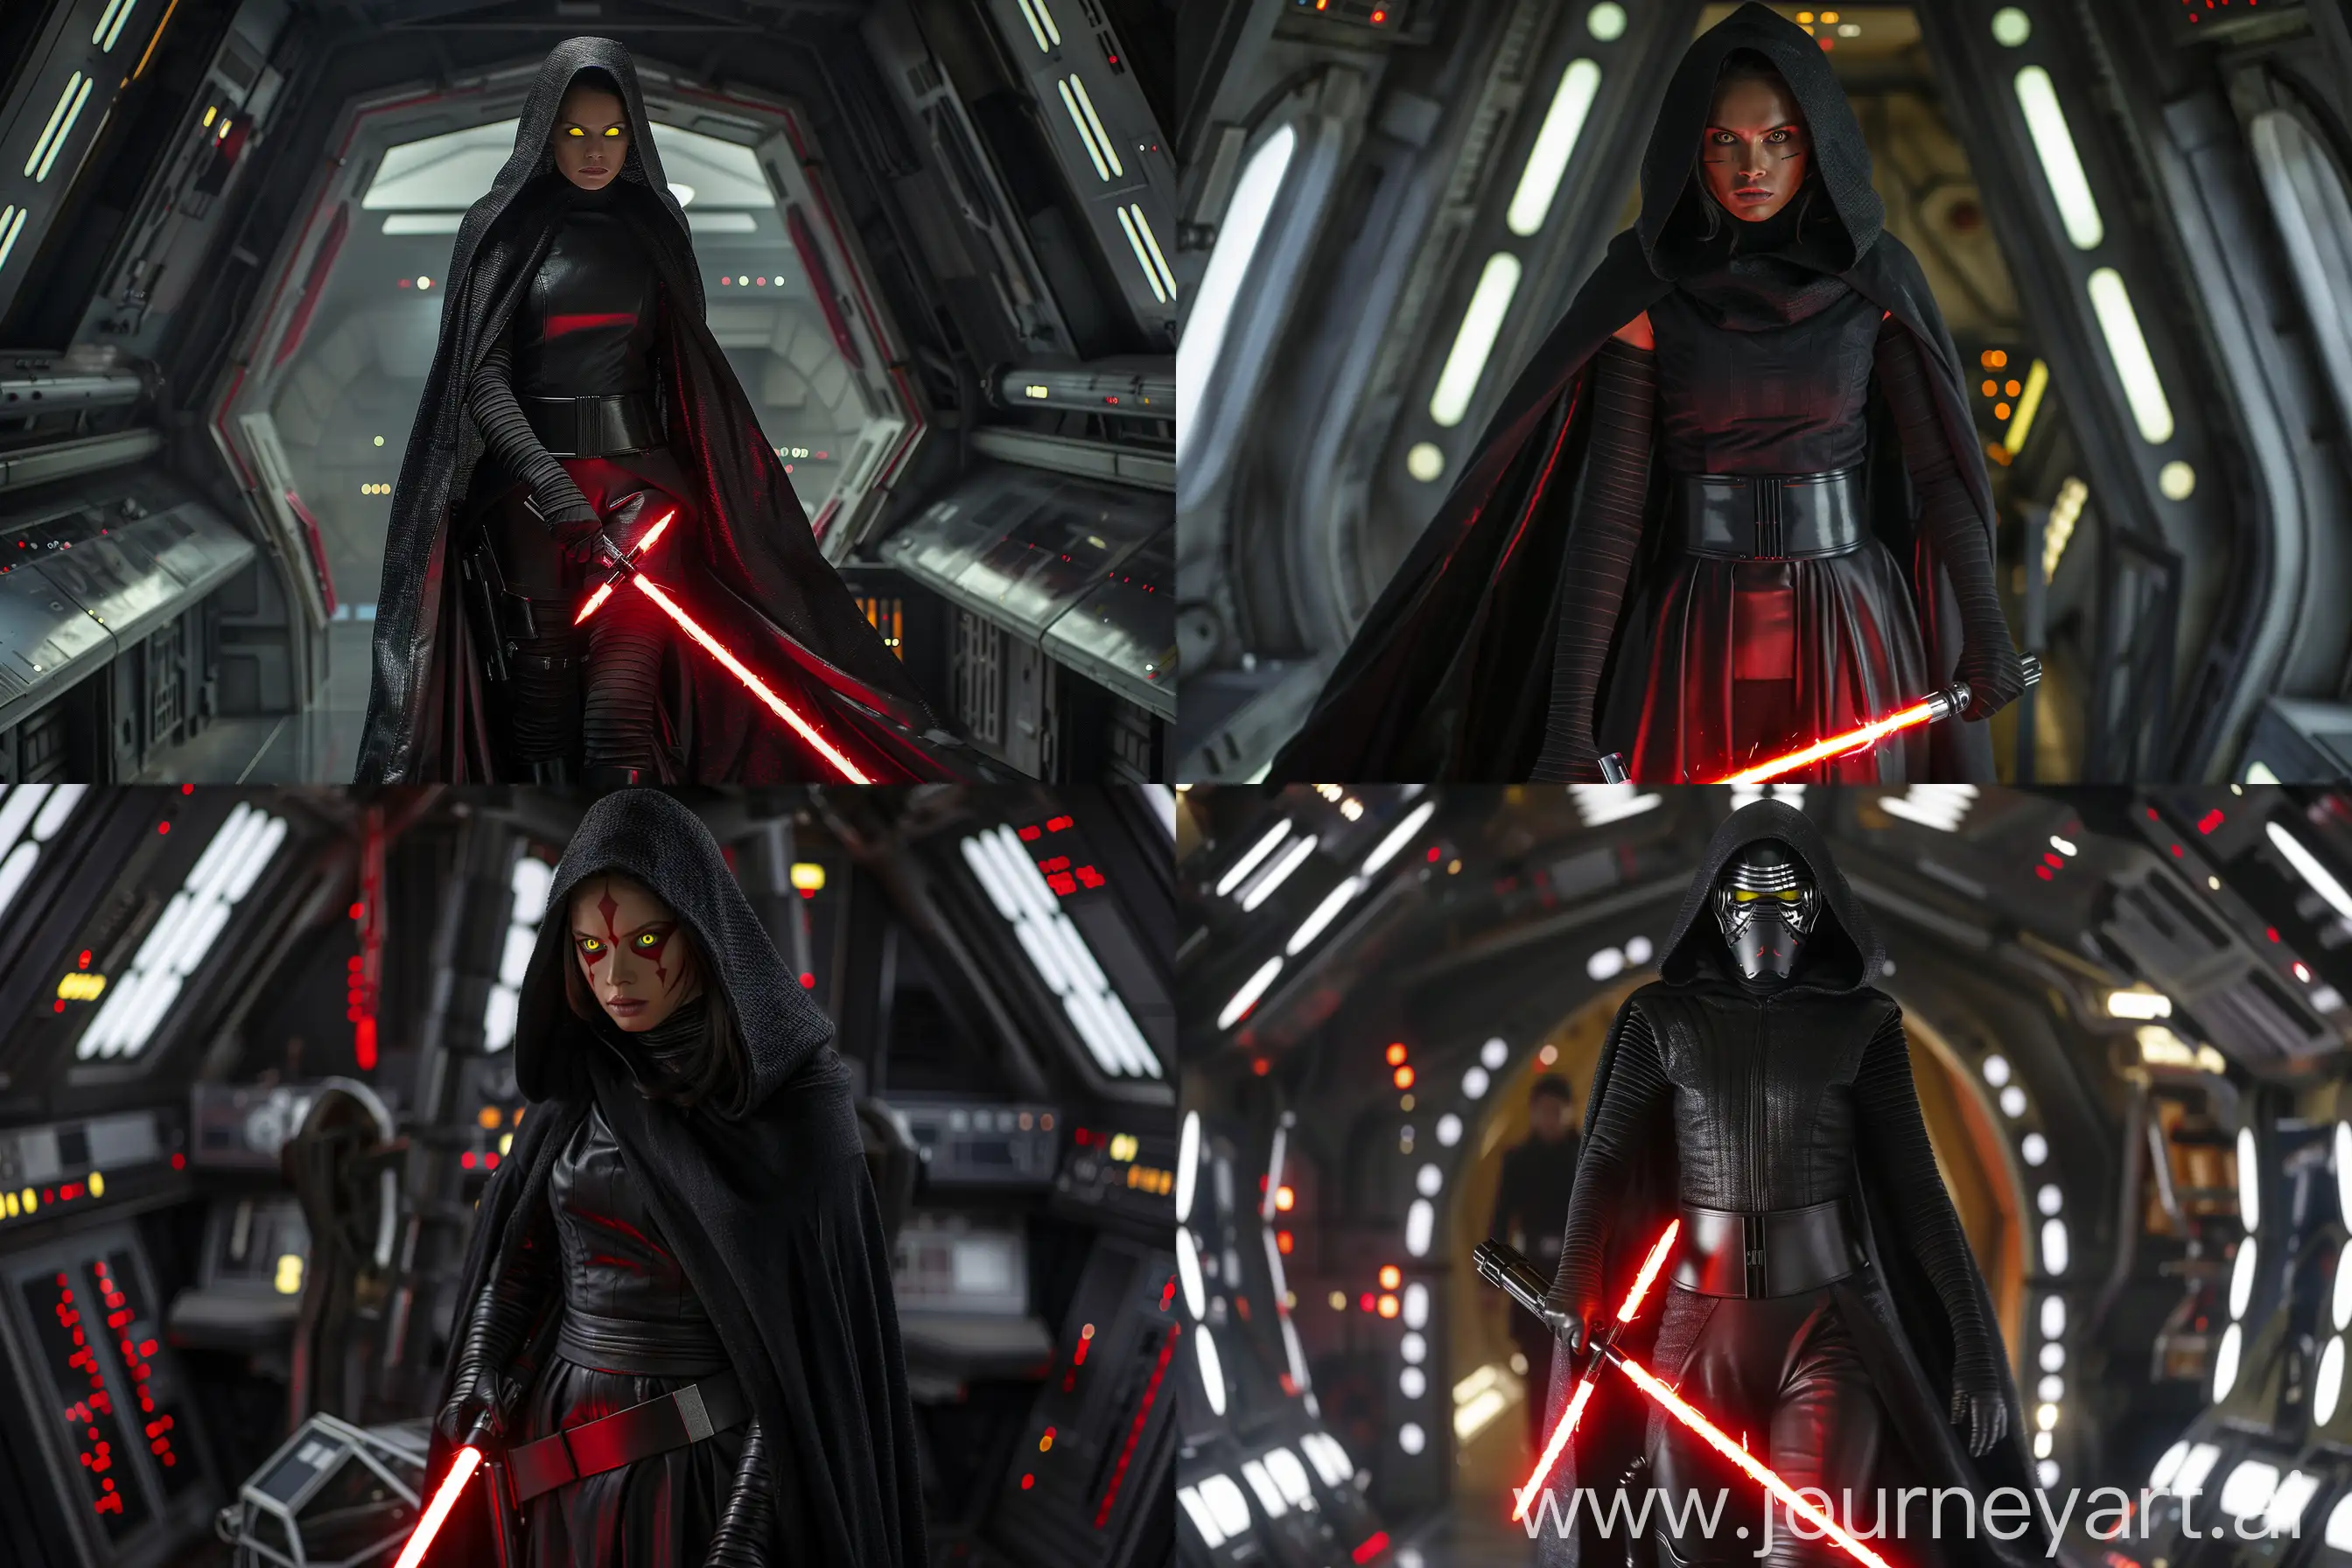 Sith-Rey-Wielding-Red-DoubleBladed-Lightsaber-in-Cinematic-Star-Wars-Scene